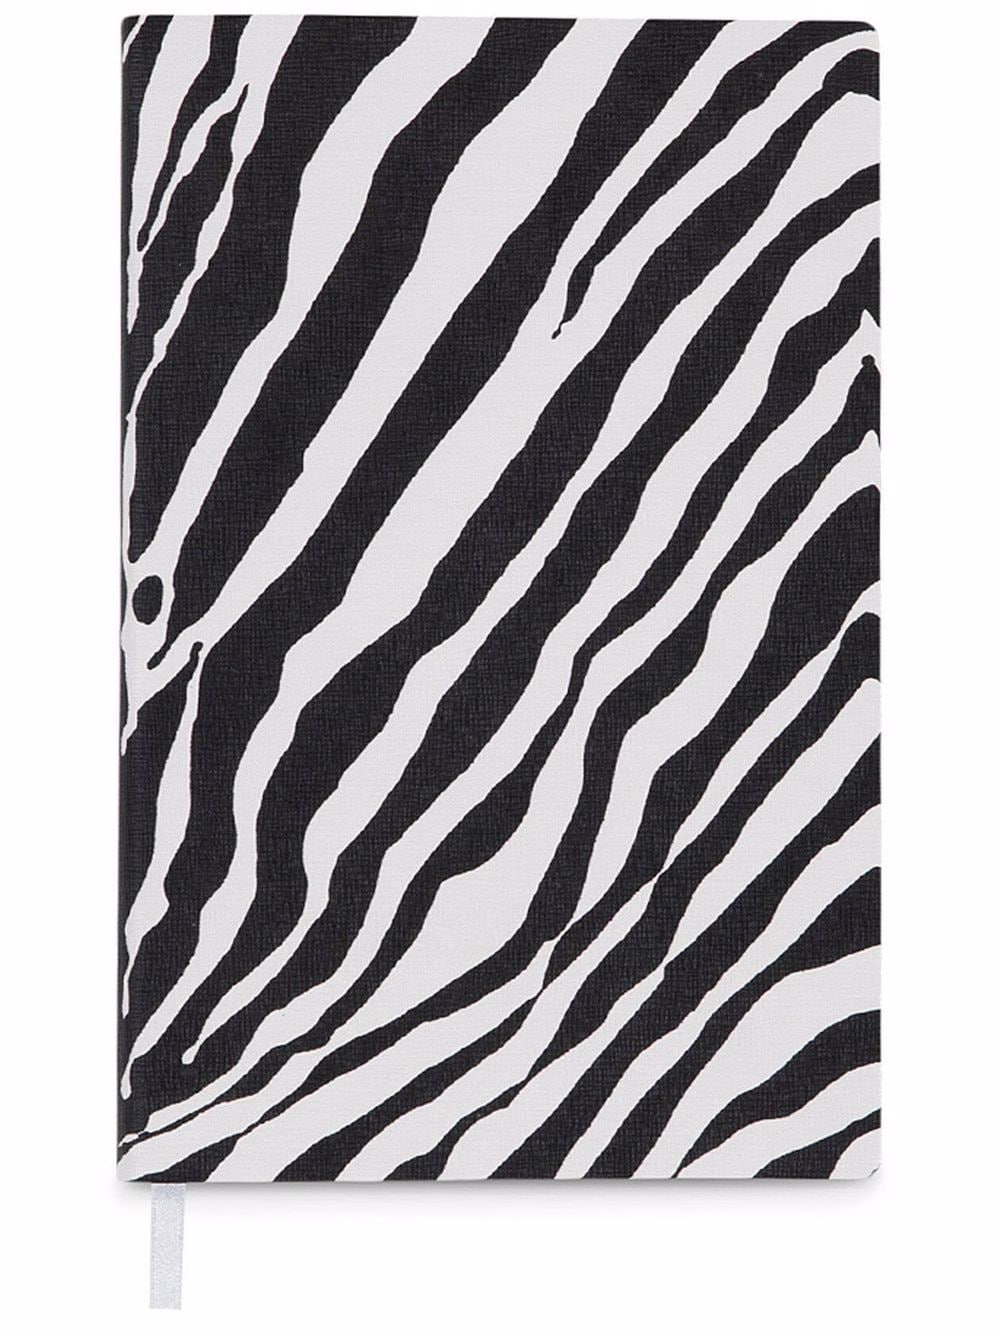 Dolce & Gabbana small zebra-print leather ruled notebook